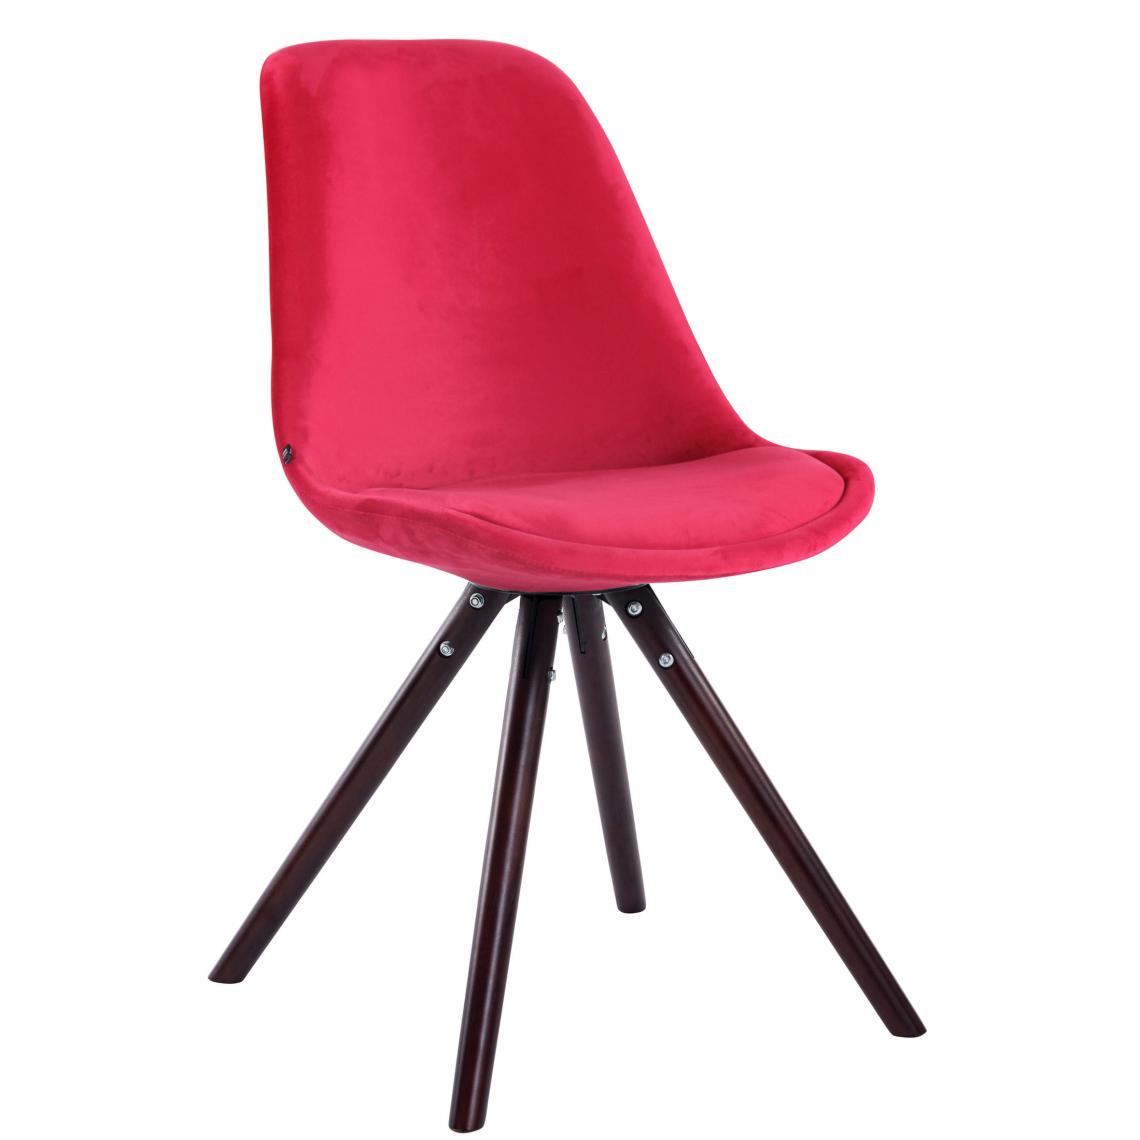 Icaverne - sublime Chaise visiteur reference Katmandou velours rond cappuccino (chêne) couleur rouge - Chaises